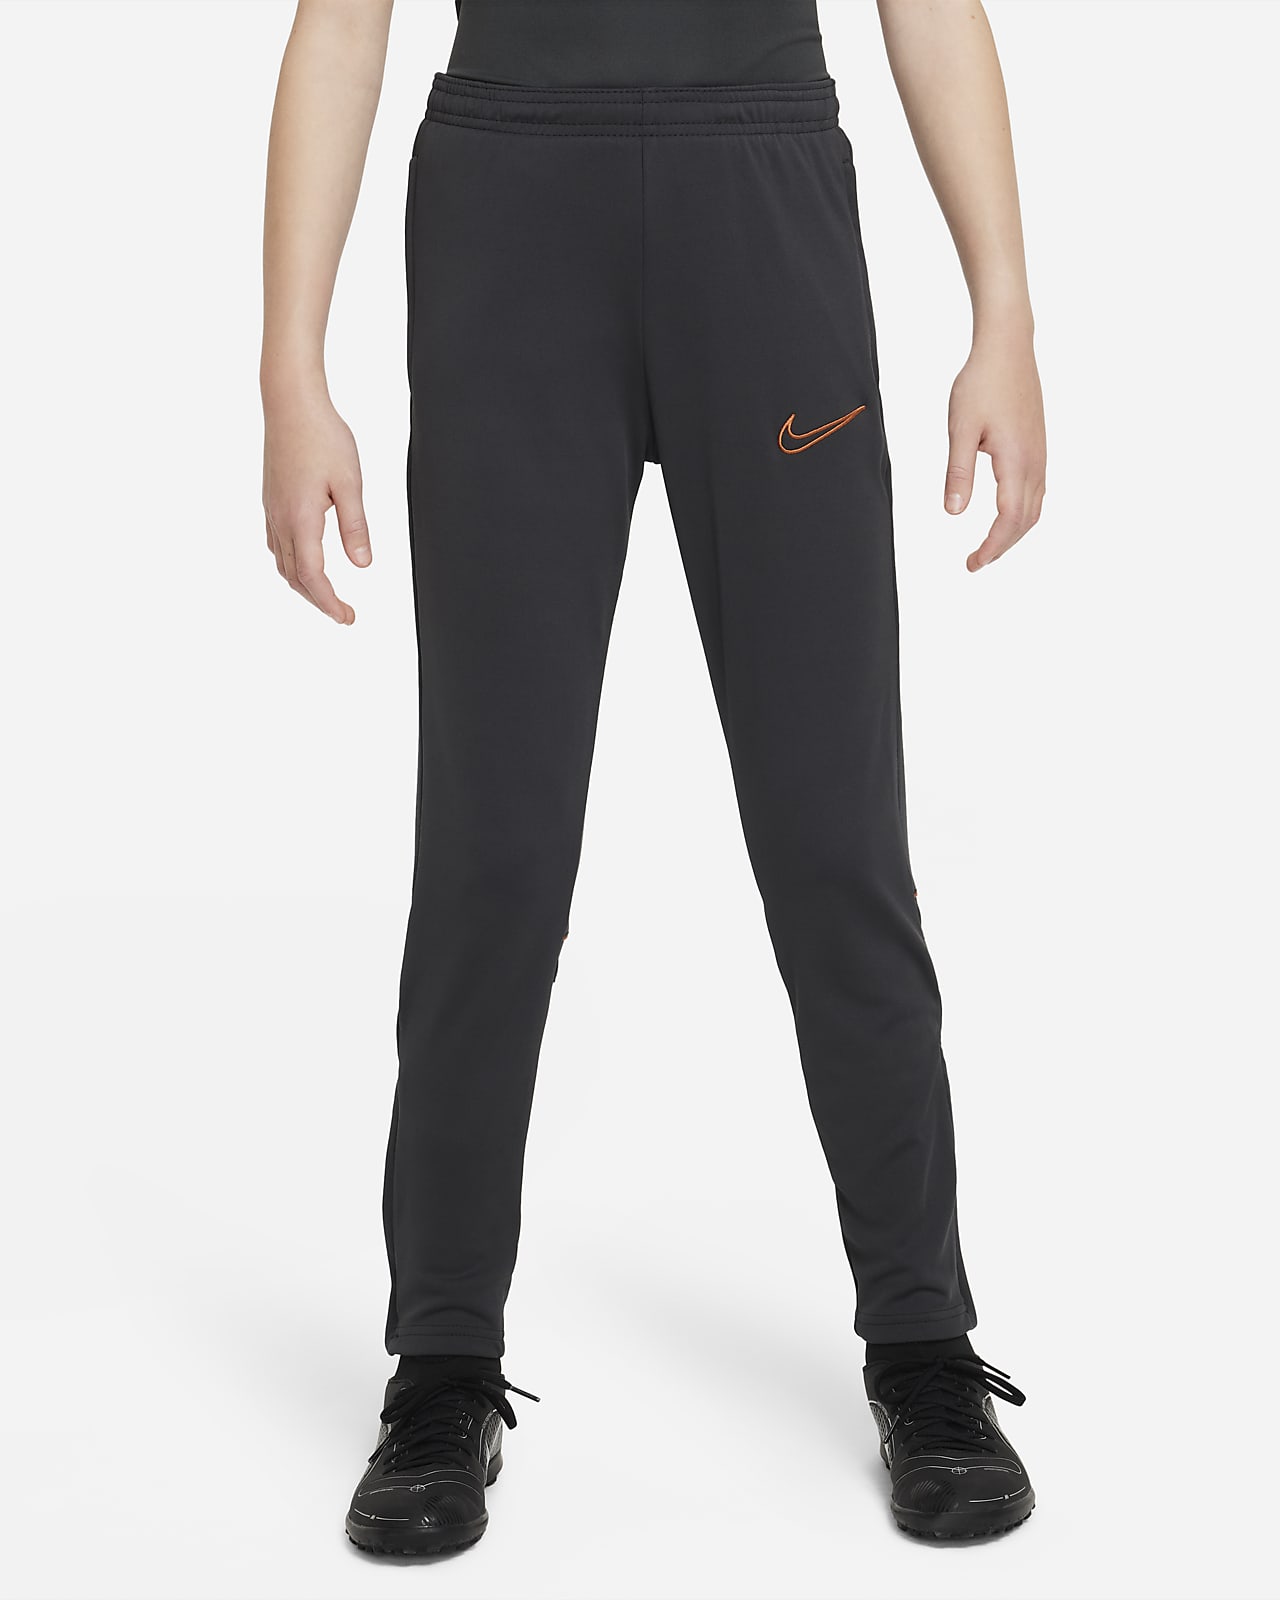 Nike Dri-FIT Academy Pantalón de fútbol de tejido Knit - Niño/a